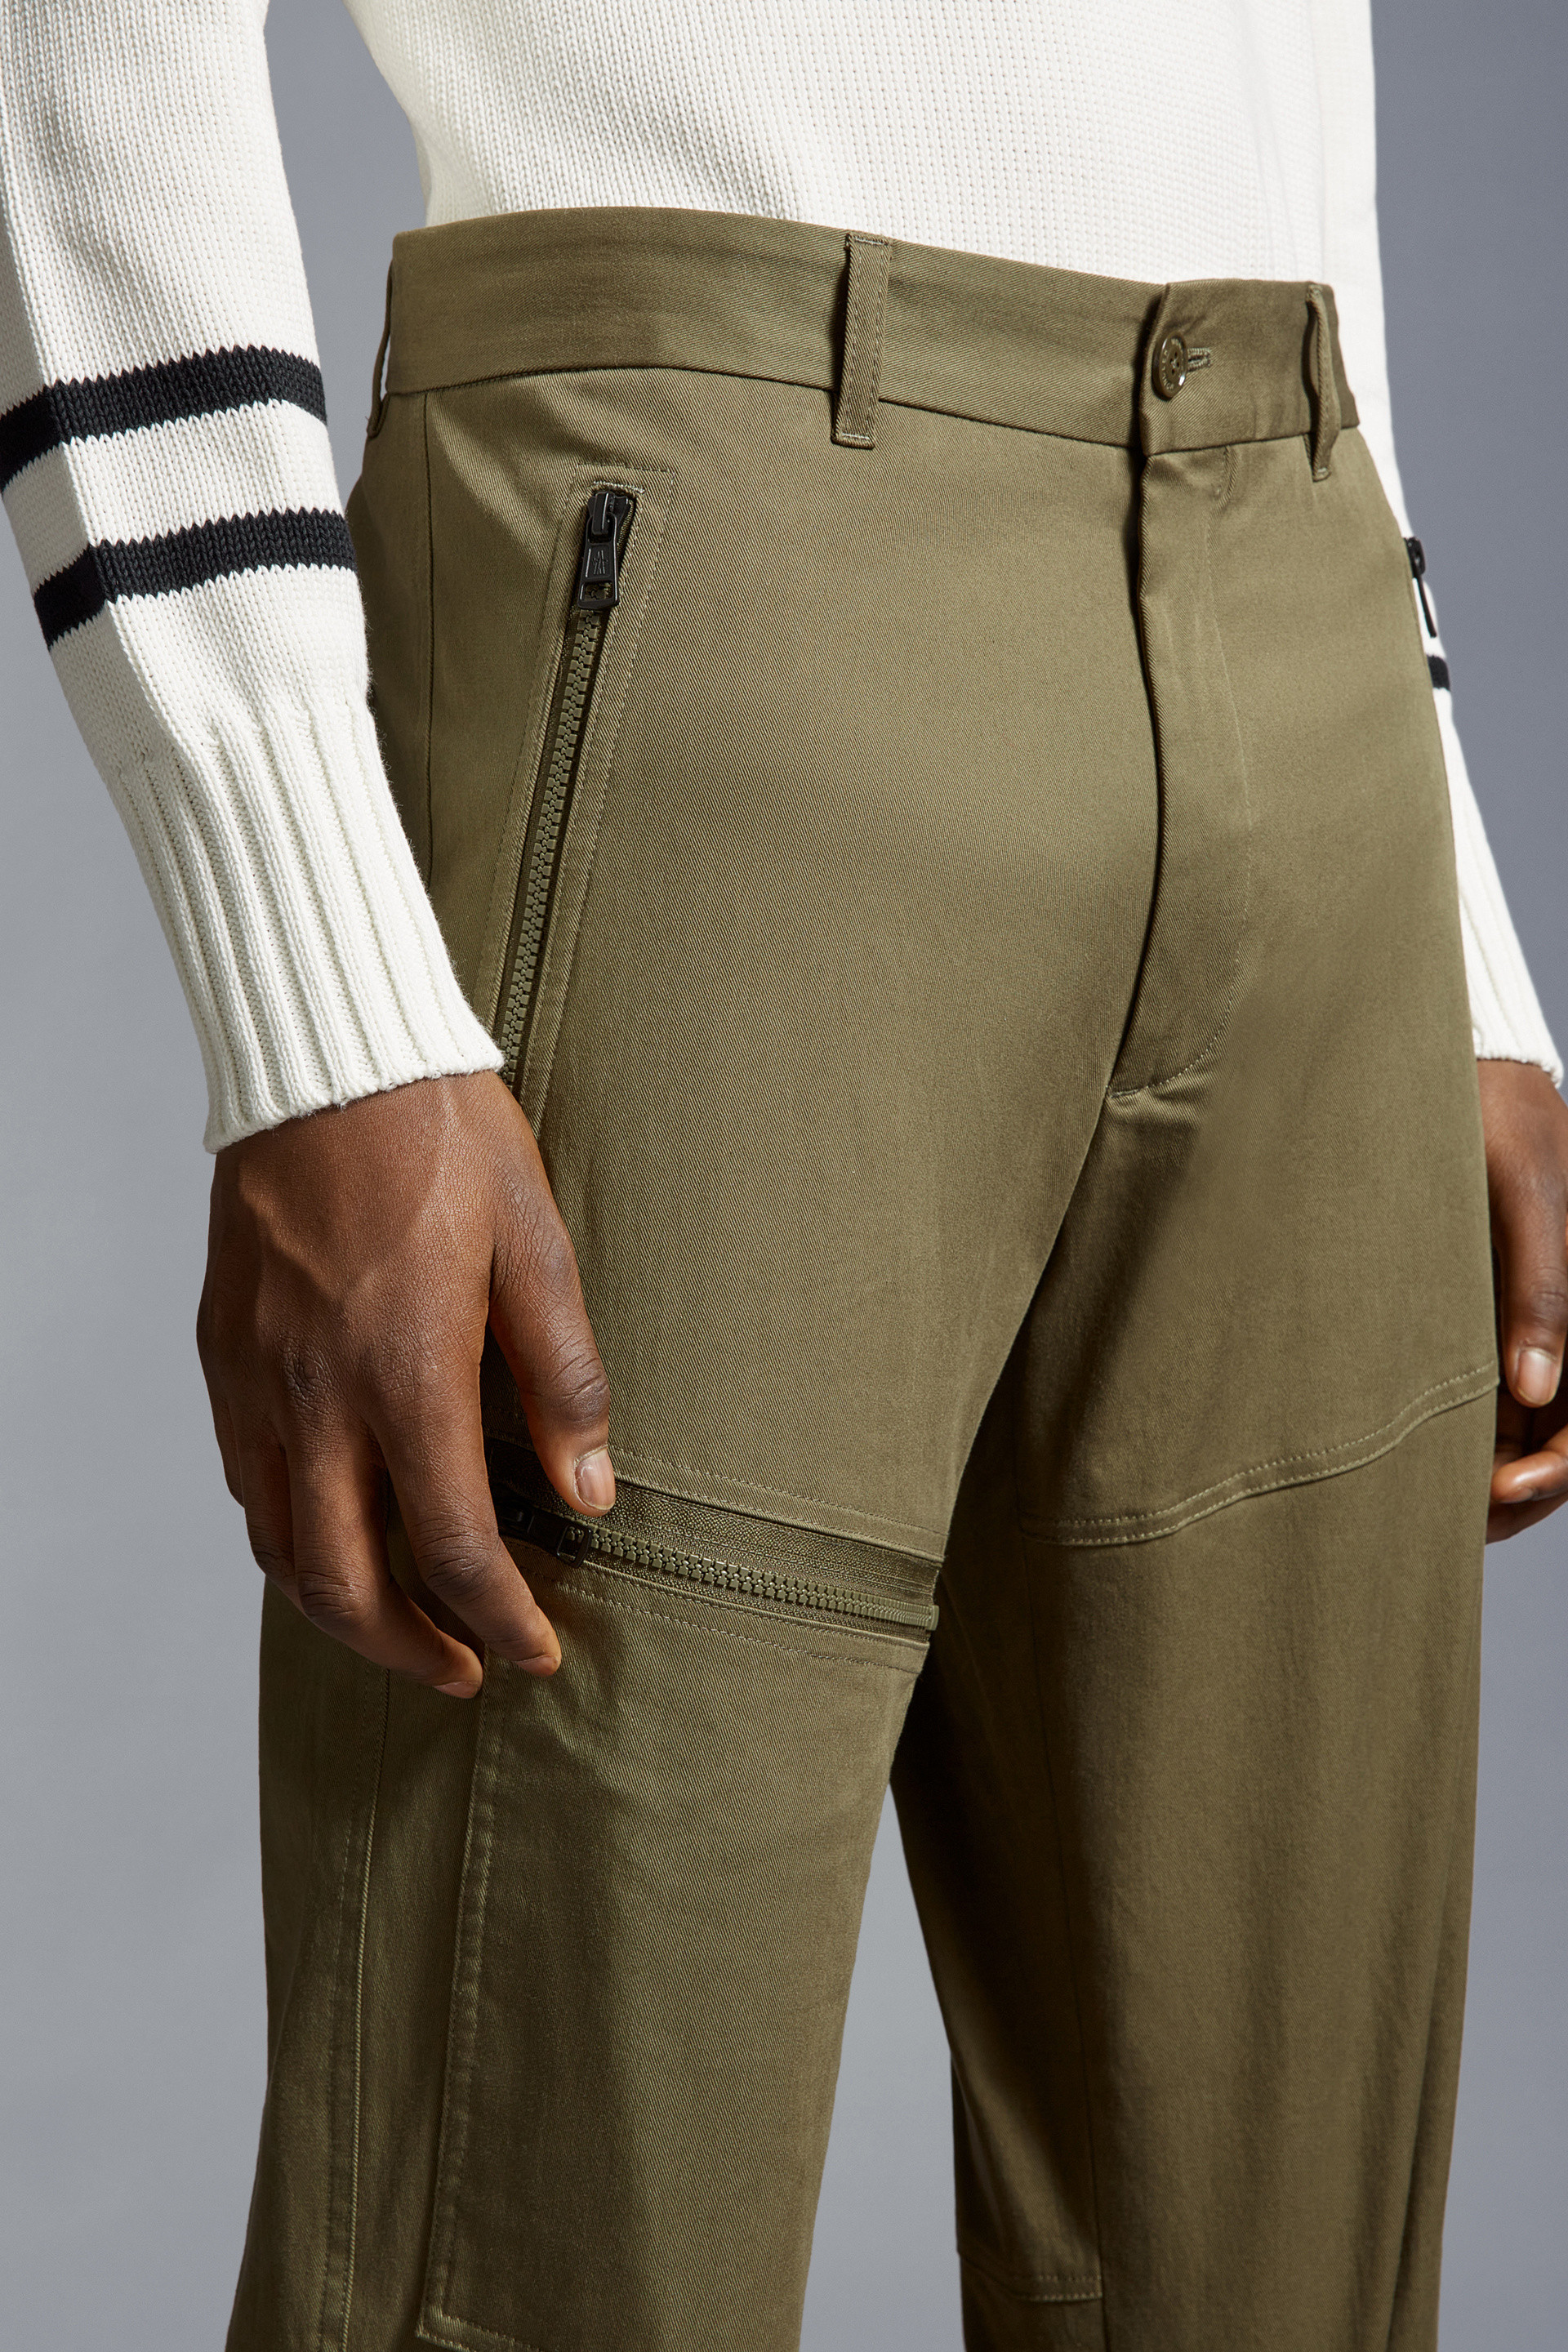 Dark Green Cotton Pants - Pants & Shorts for Men